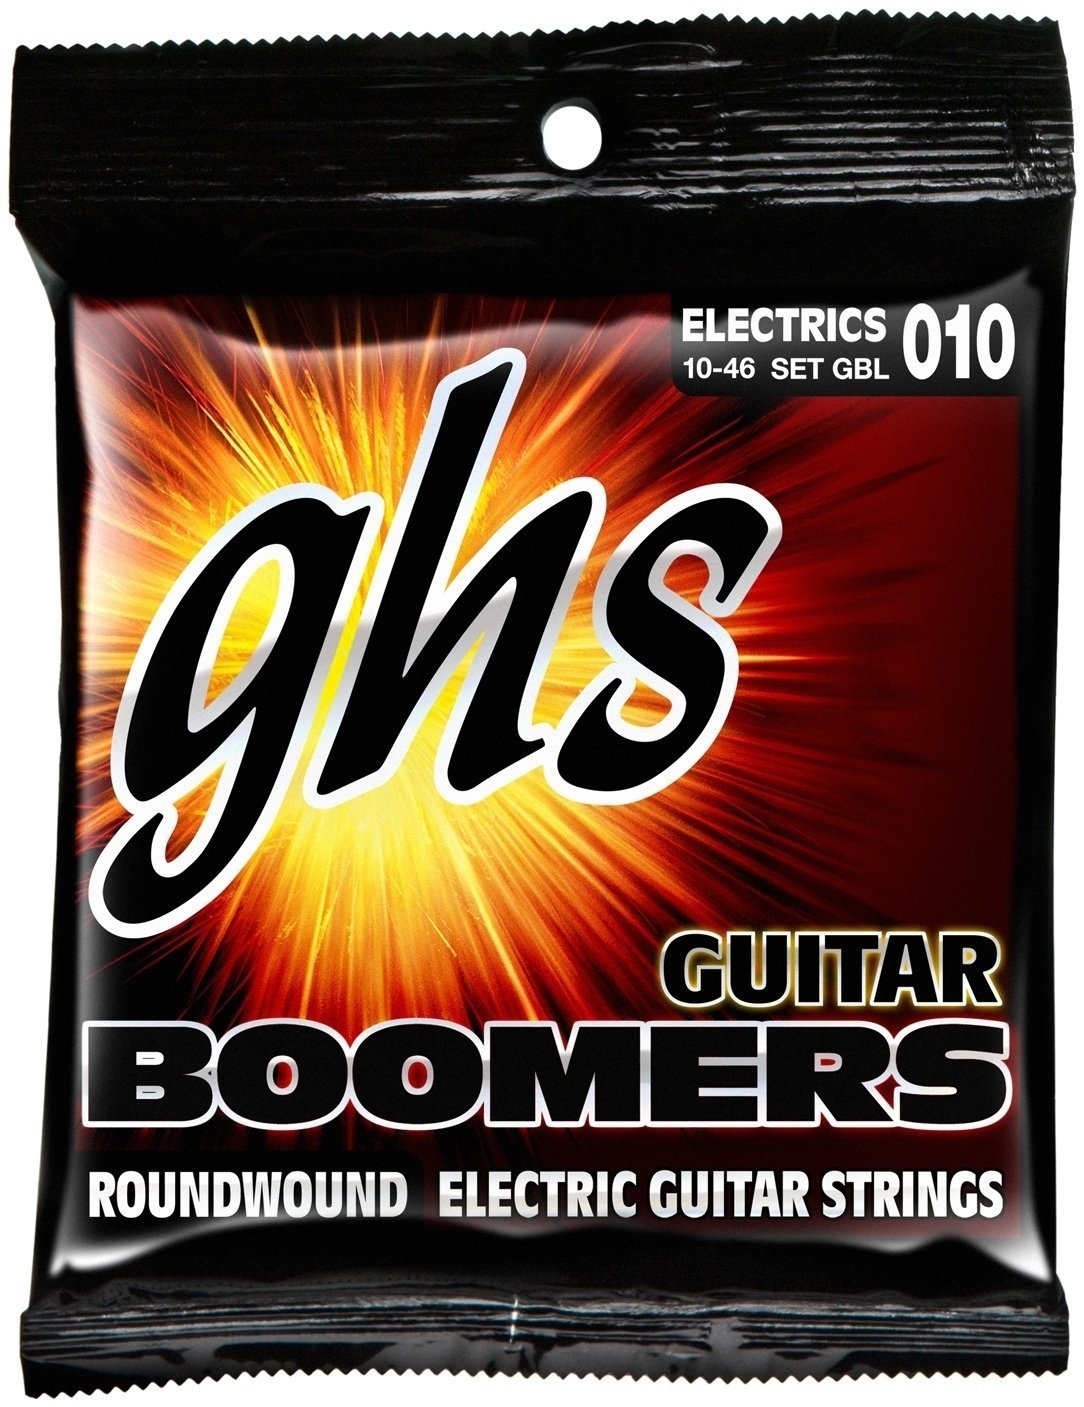 Corzi chitare electrice GHS Boomers Roundwound 10-46